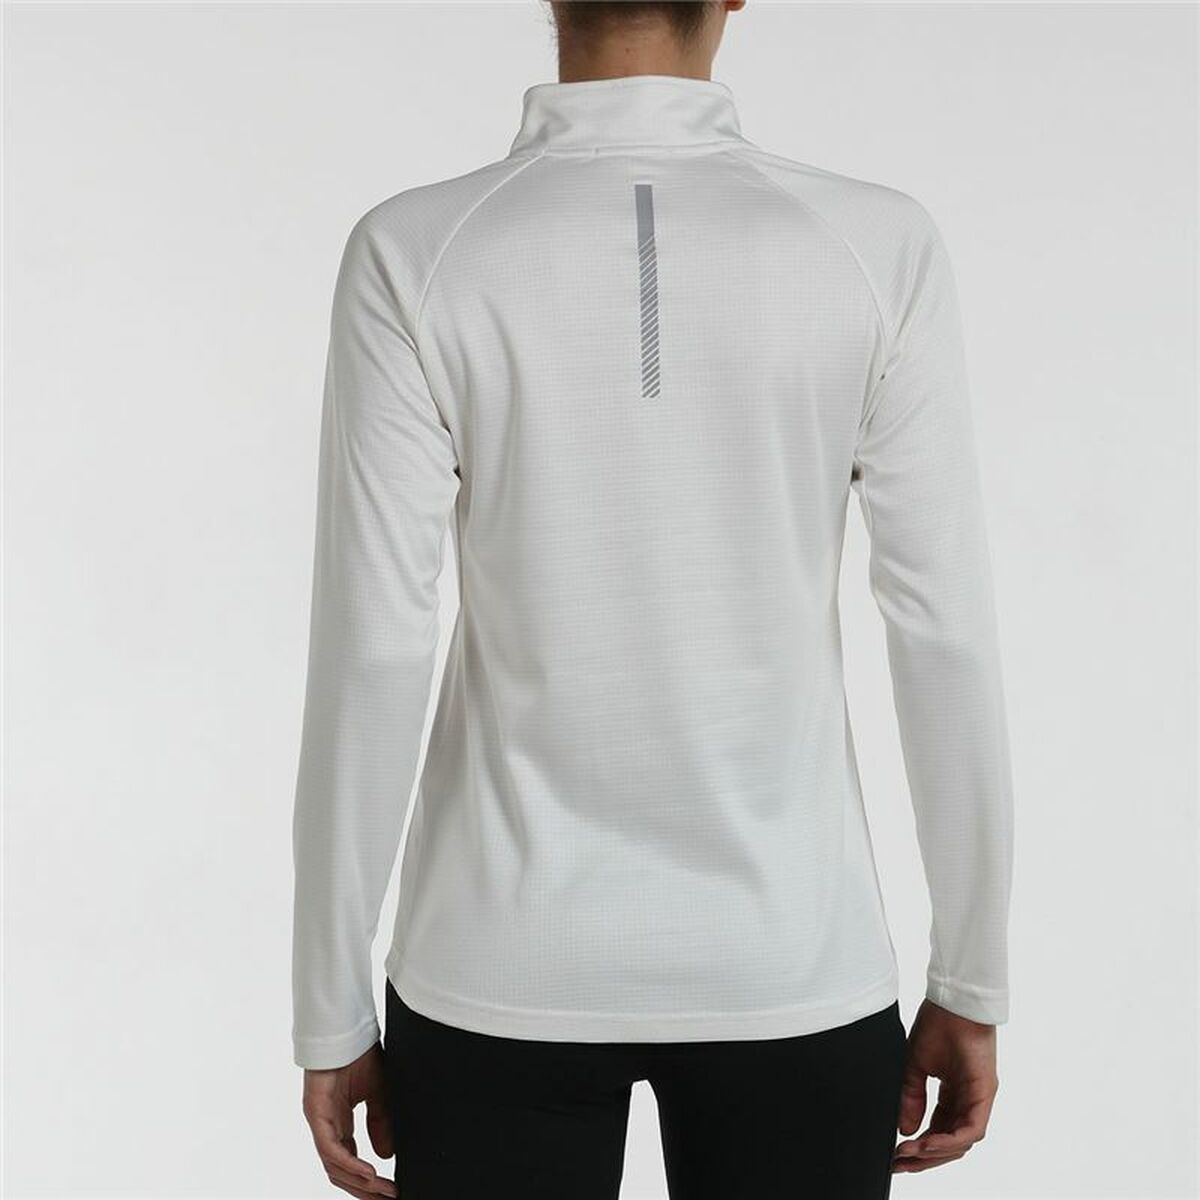 Damen Langarm-T-Shirt +8000 Pagoeta Weiß